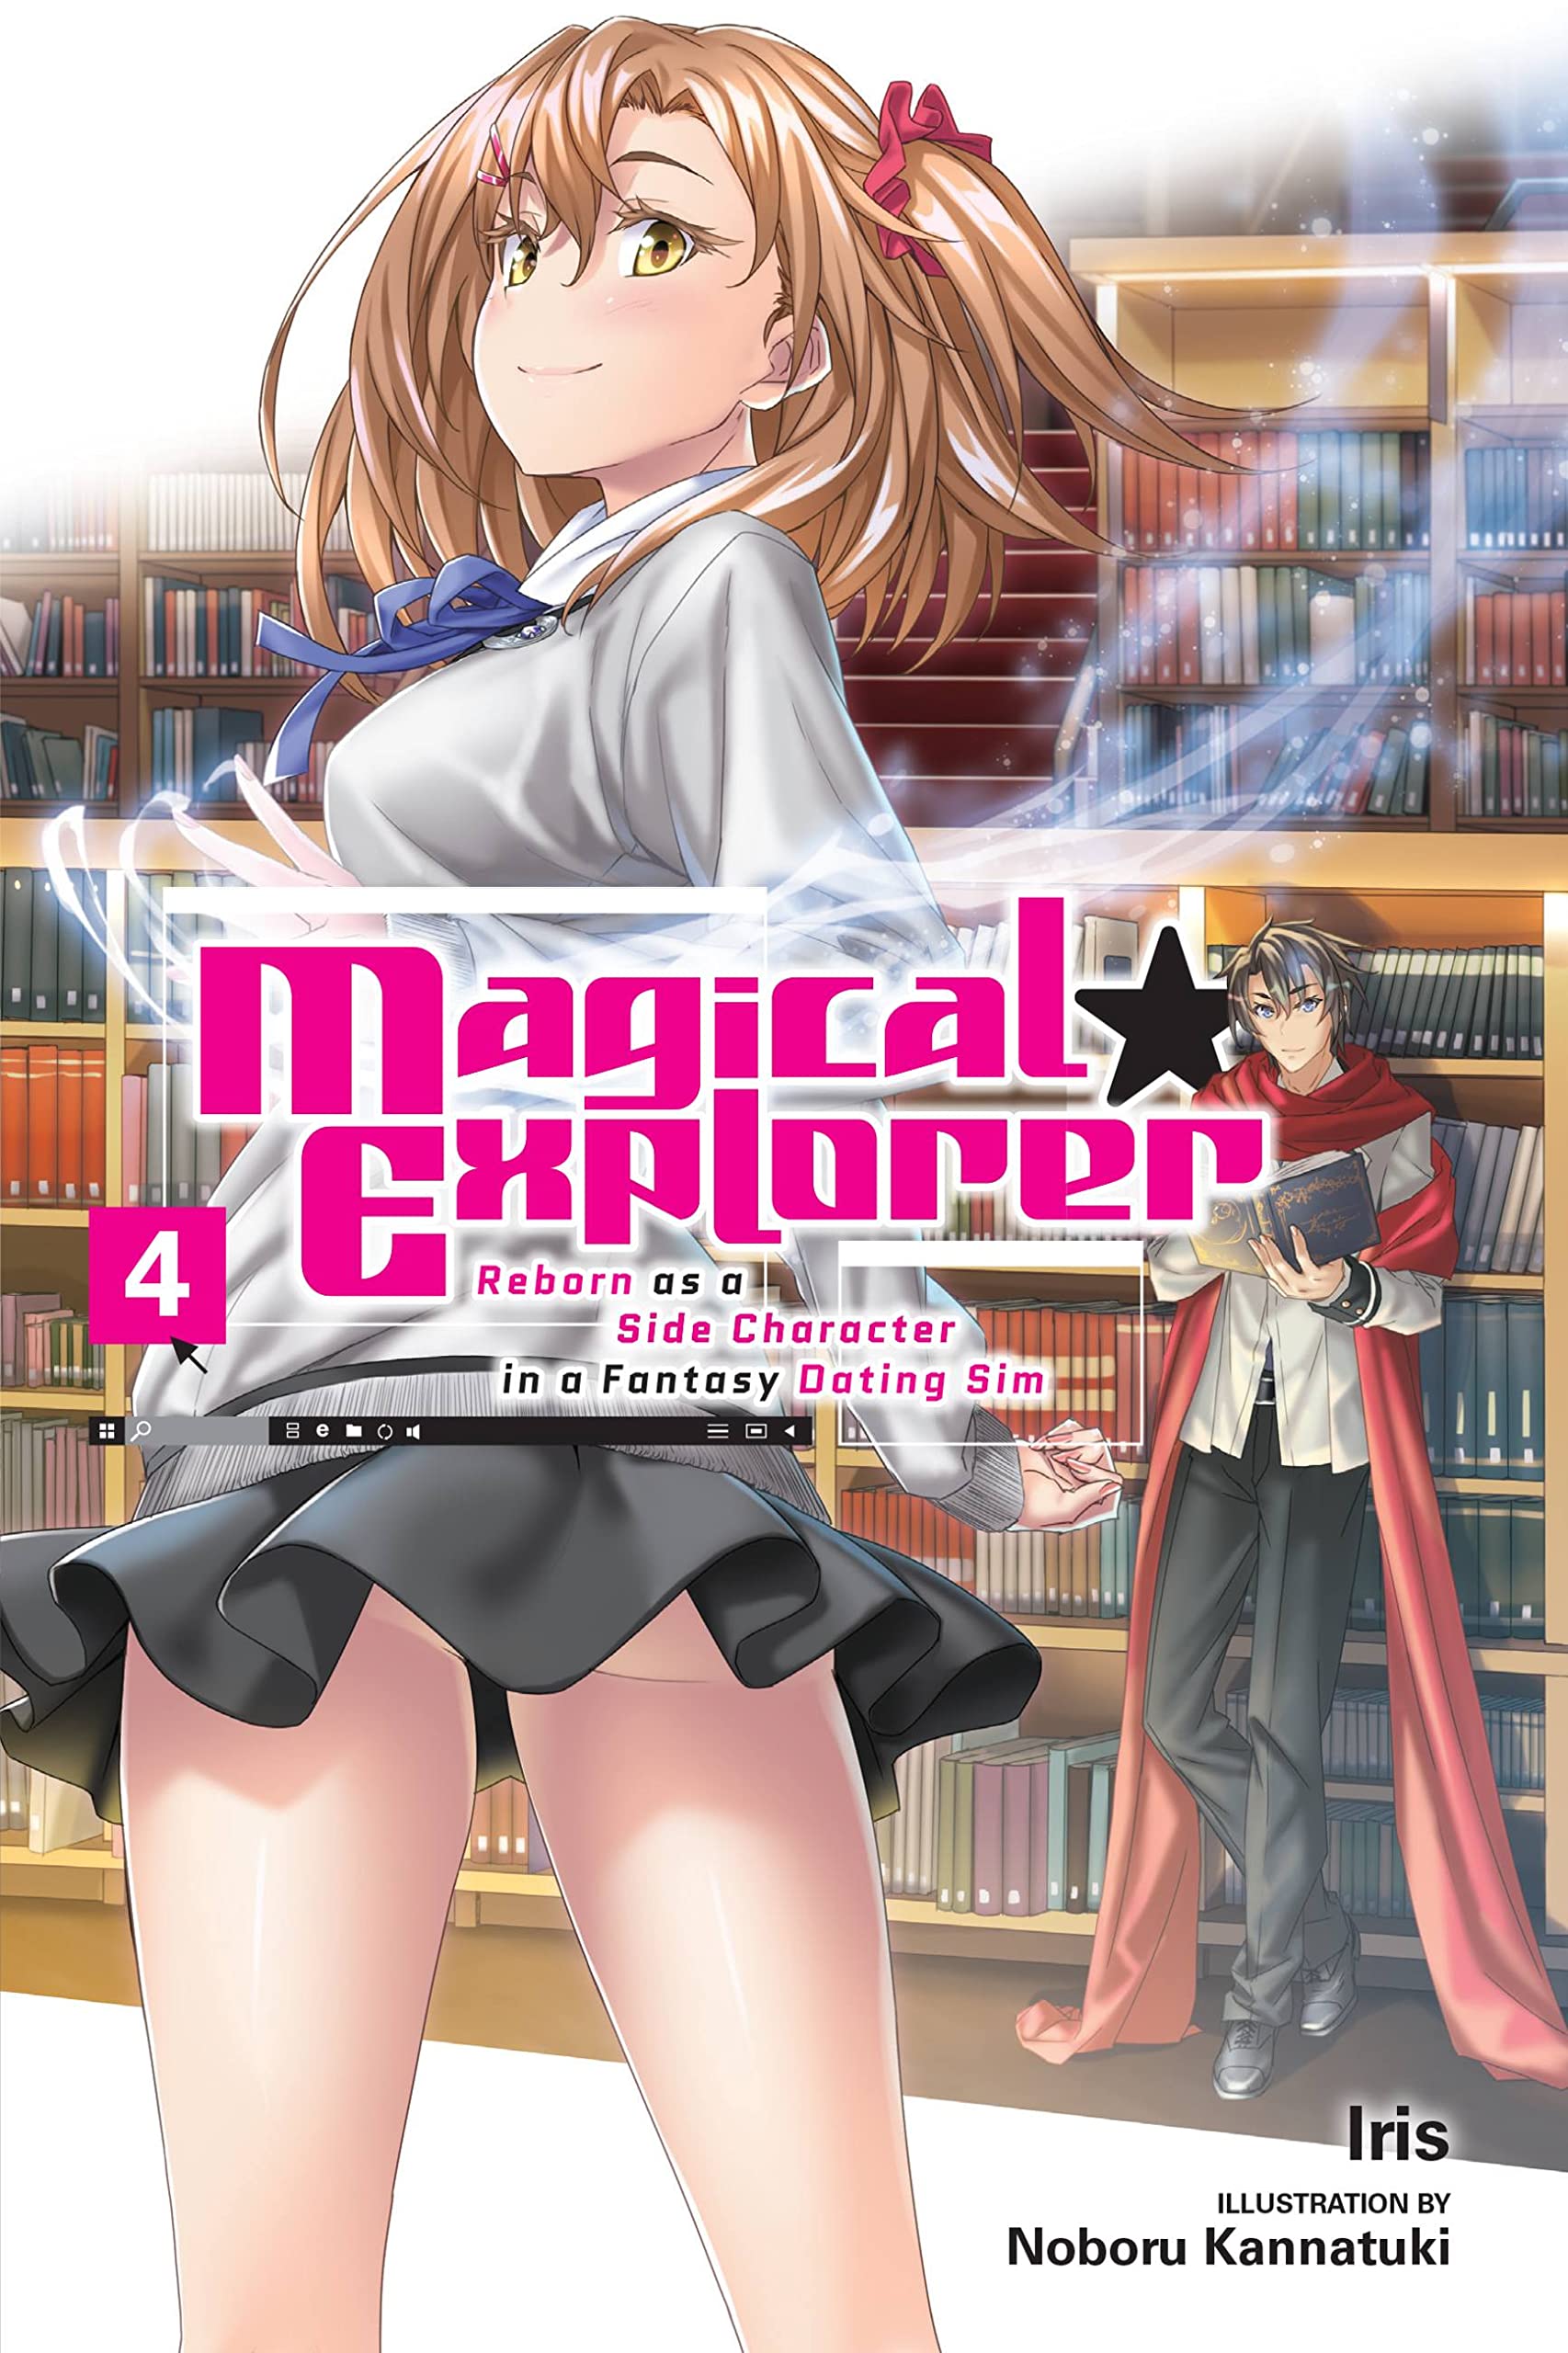 Magical Explorer Vol. 04 (Light Novel): Reborn as a Side Character in a Fantasy Dating Sim